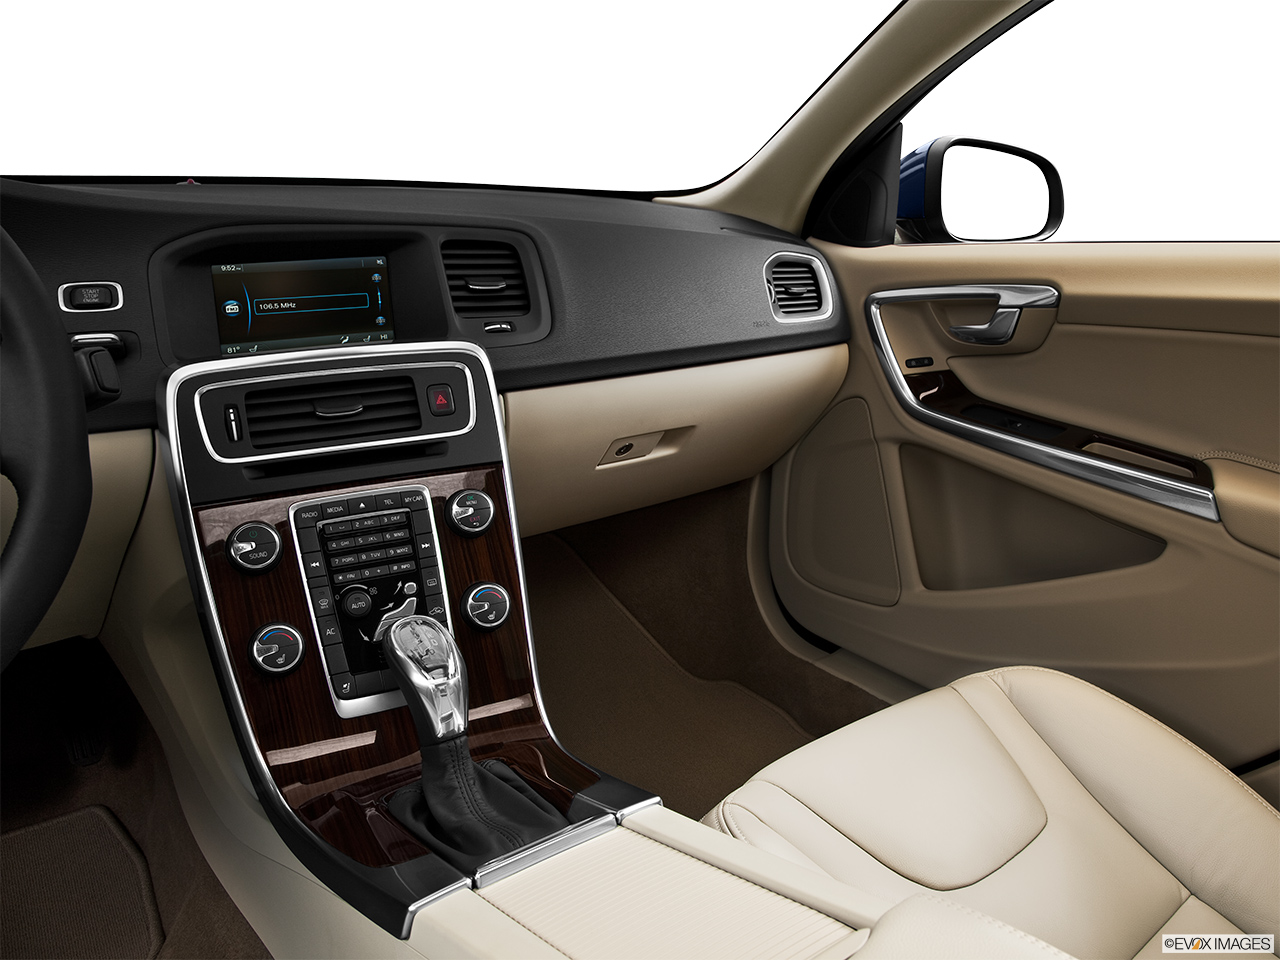 2013 Volvo S60 T5 FWD Premier Center Console/Passenger Side. 